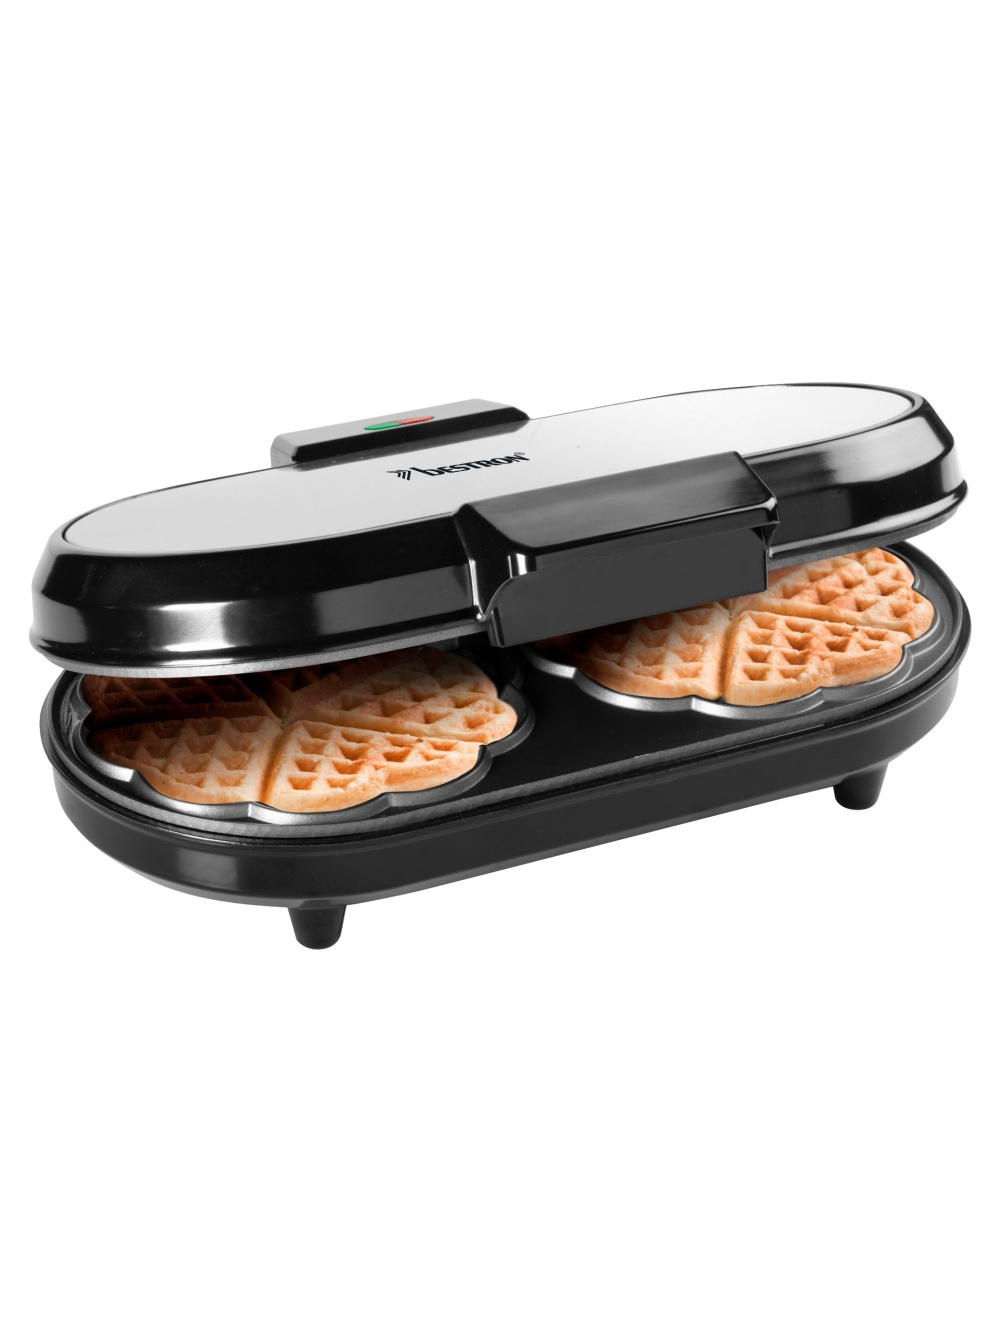 ADWM7300S Double waffle maker for classic heart-shaped waffles